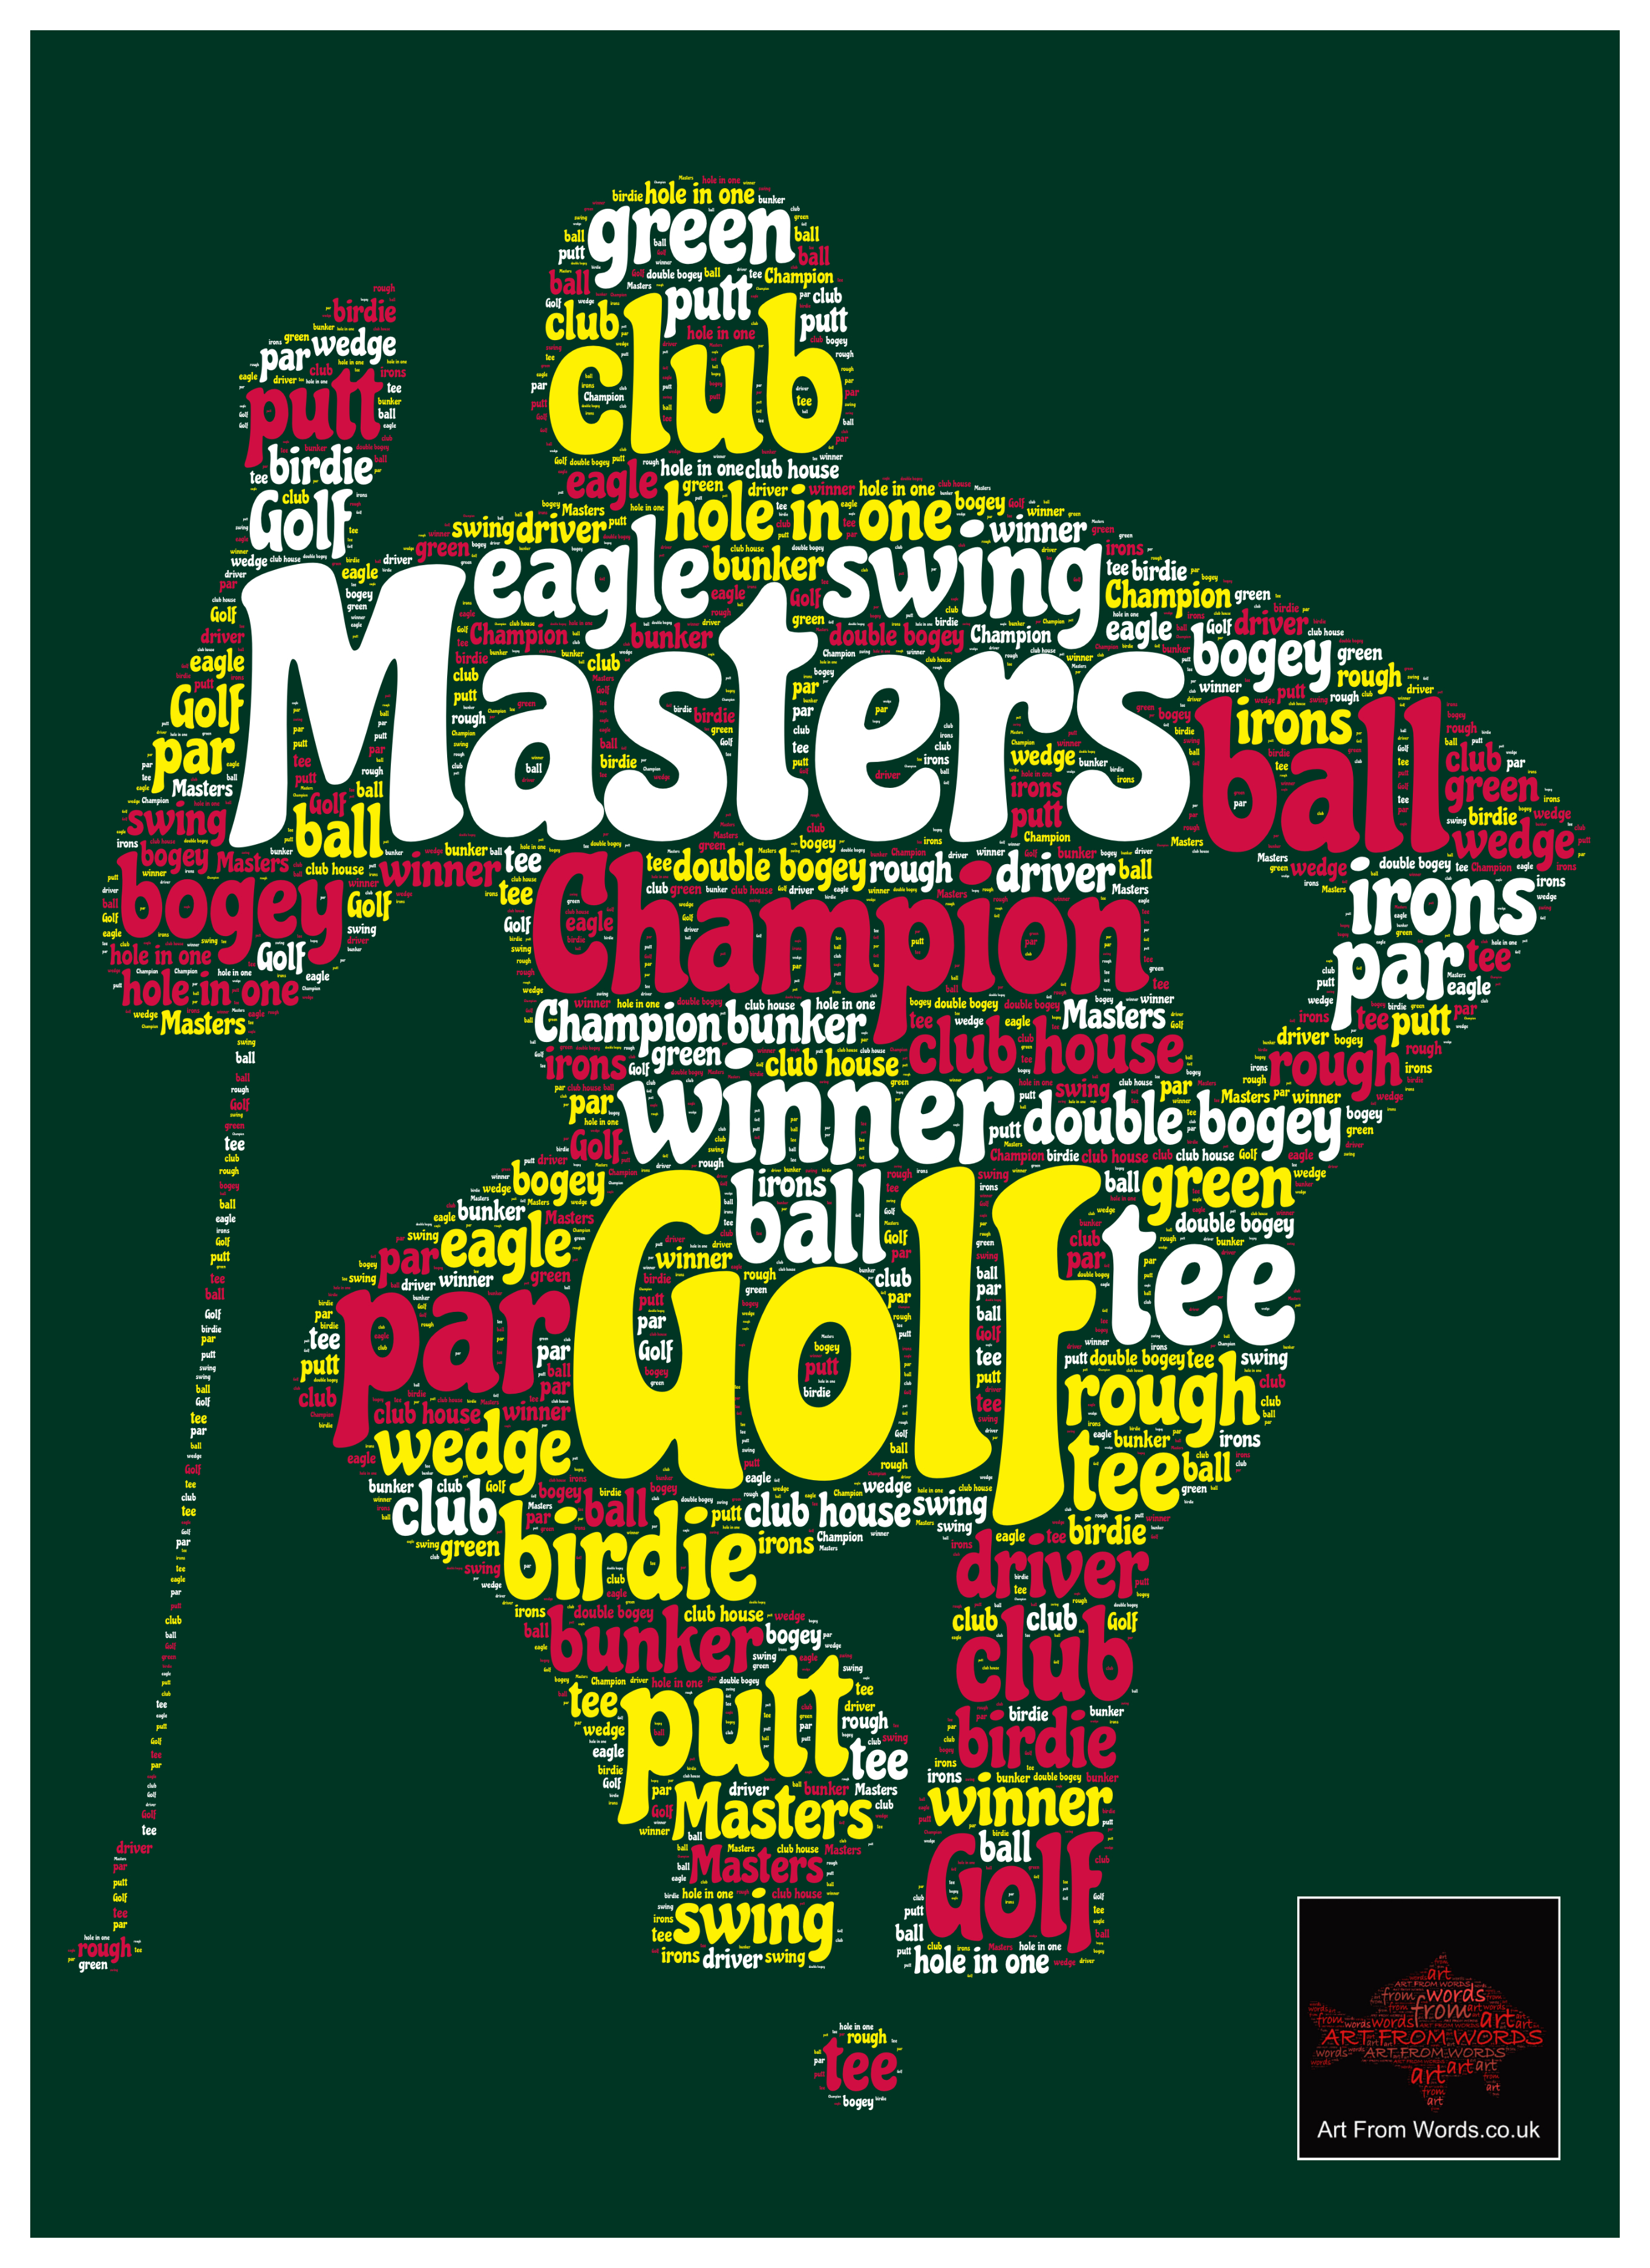 Master Golf